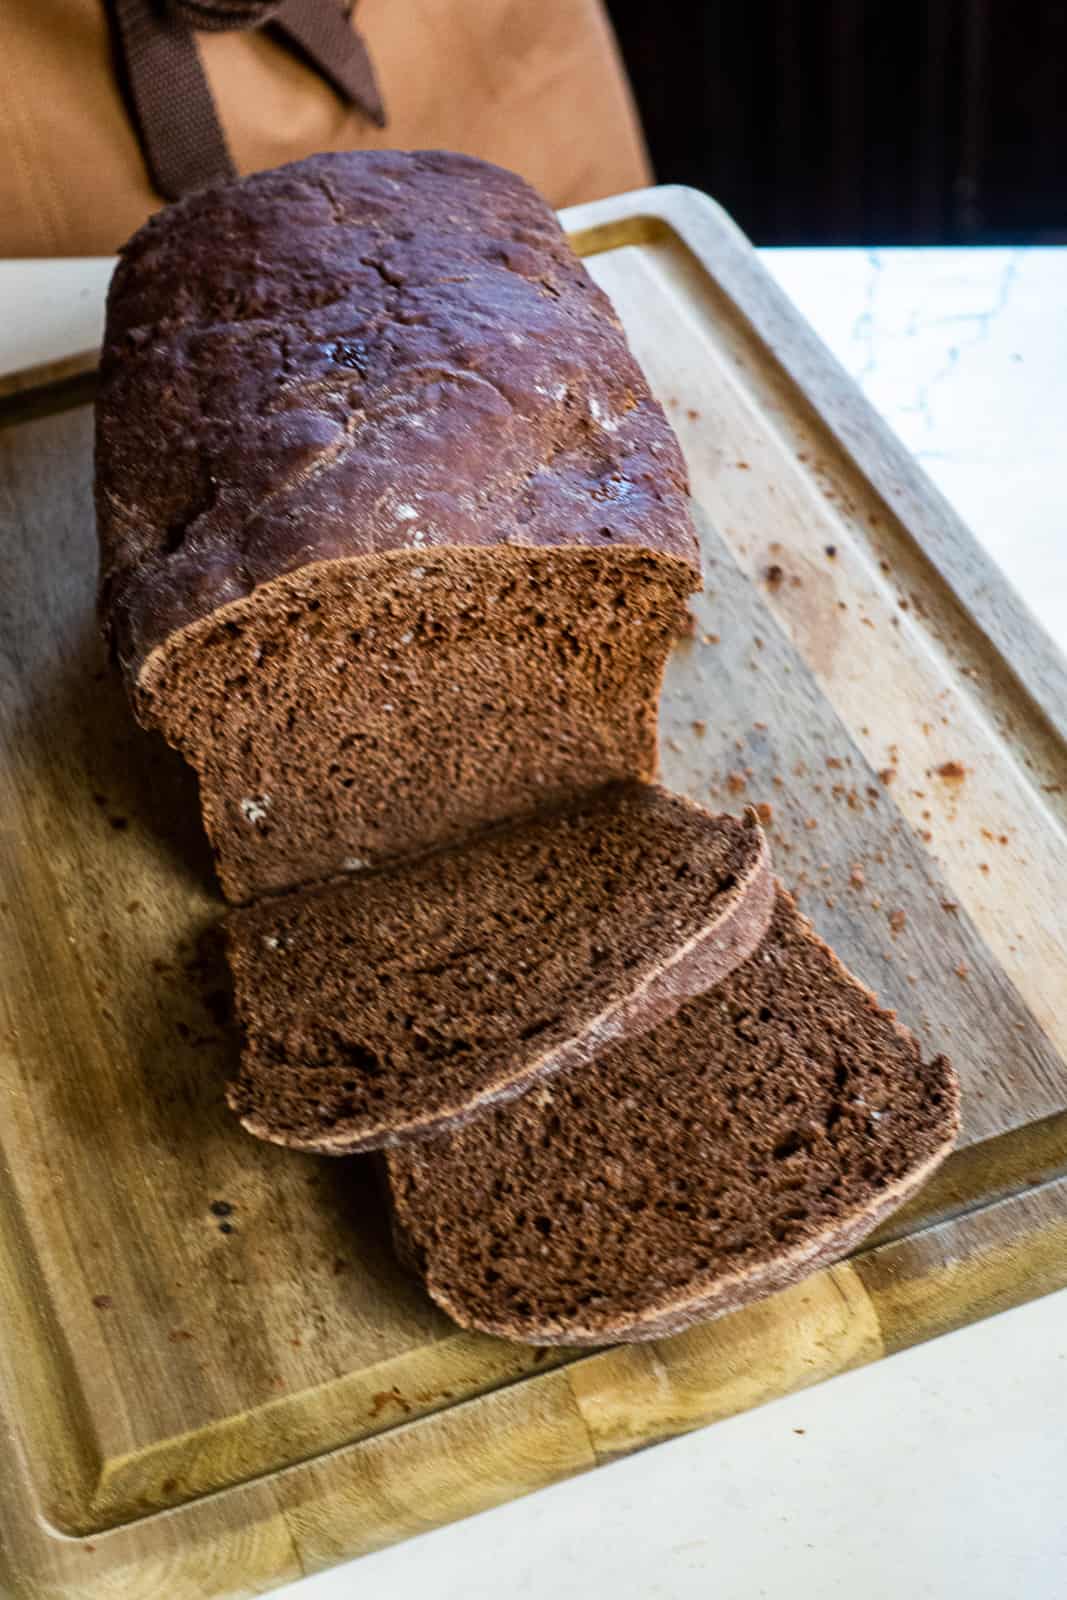 Sliced Chocolate Yeast Bread Loaf on a cutting board